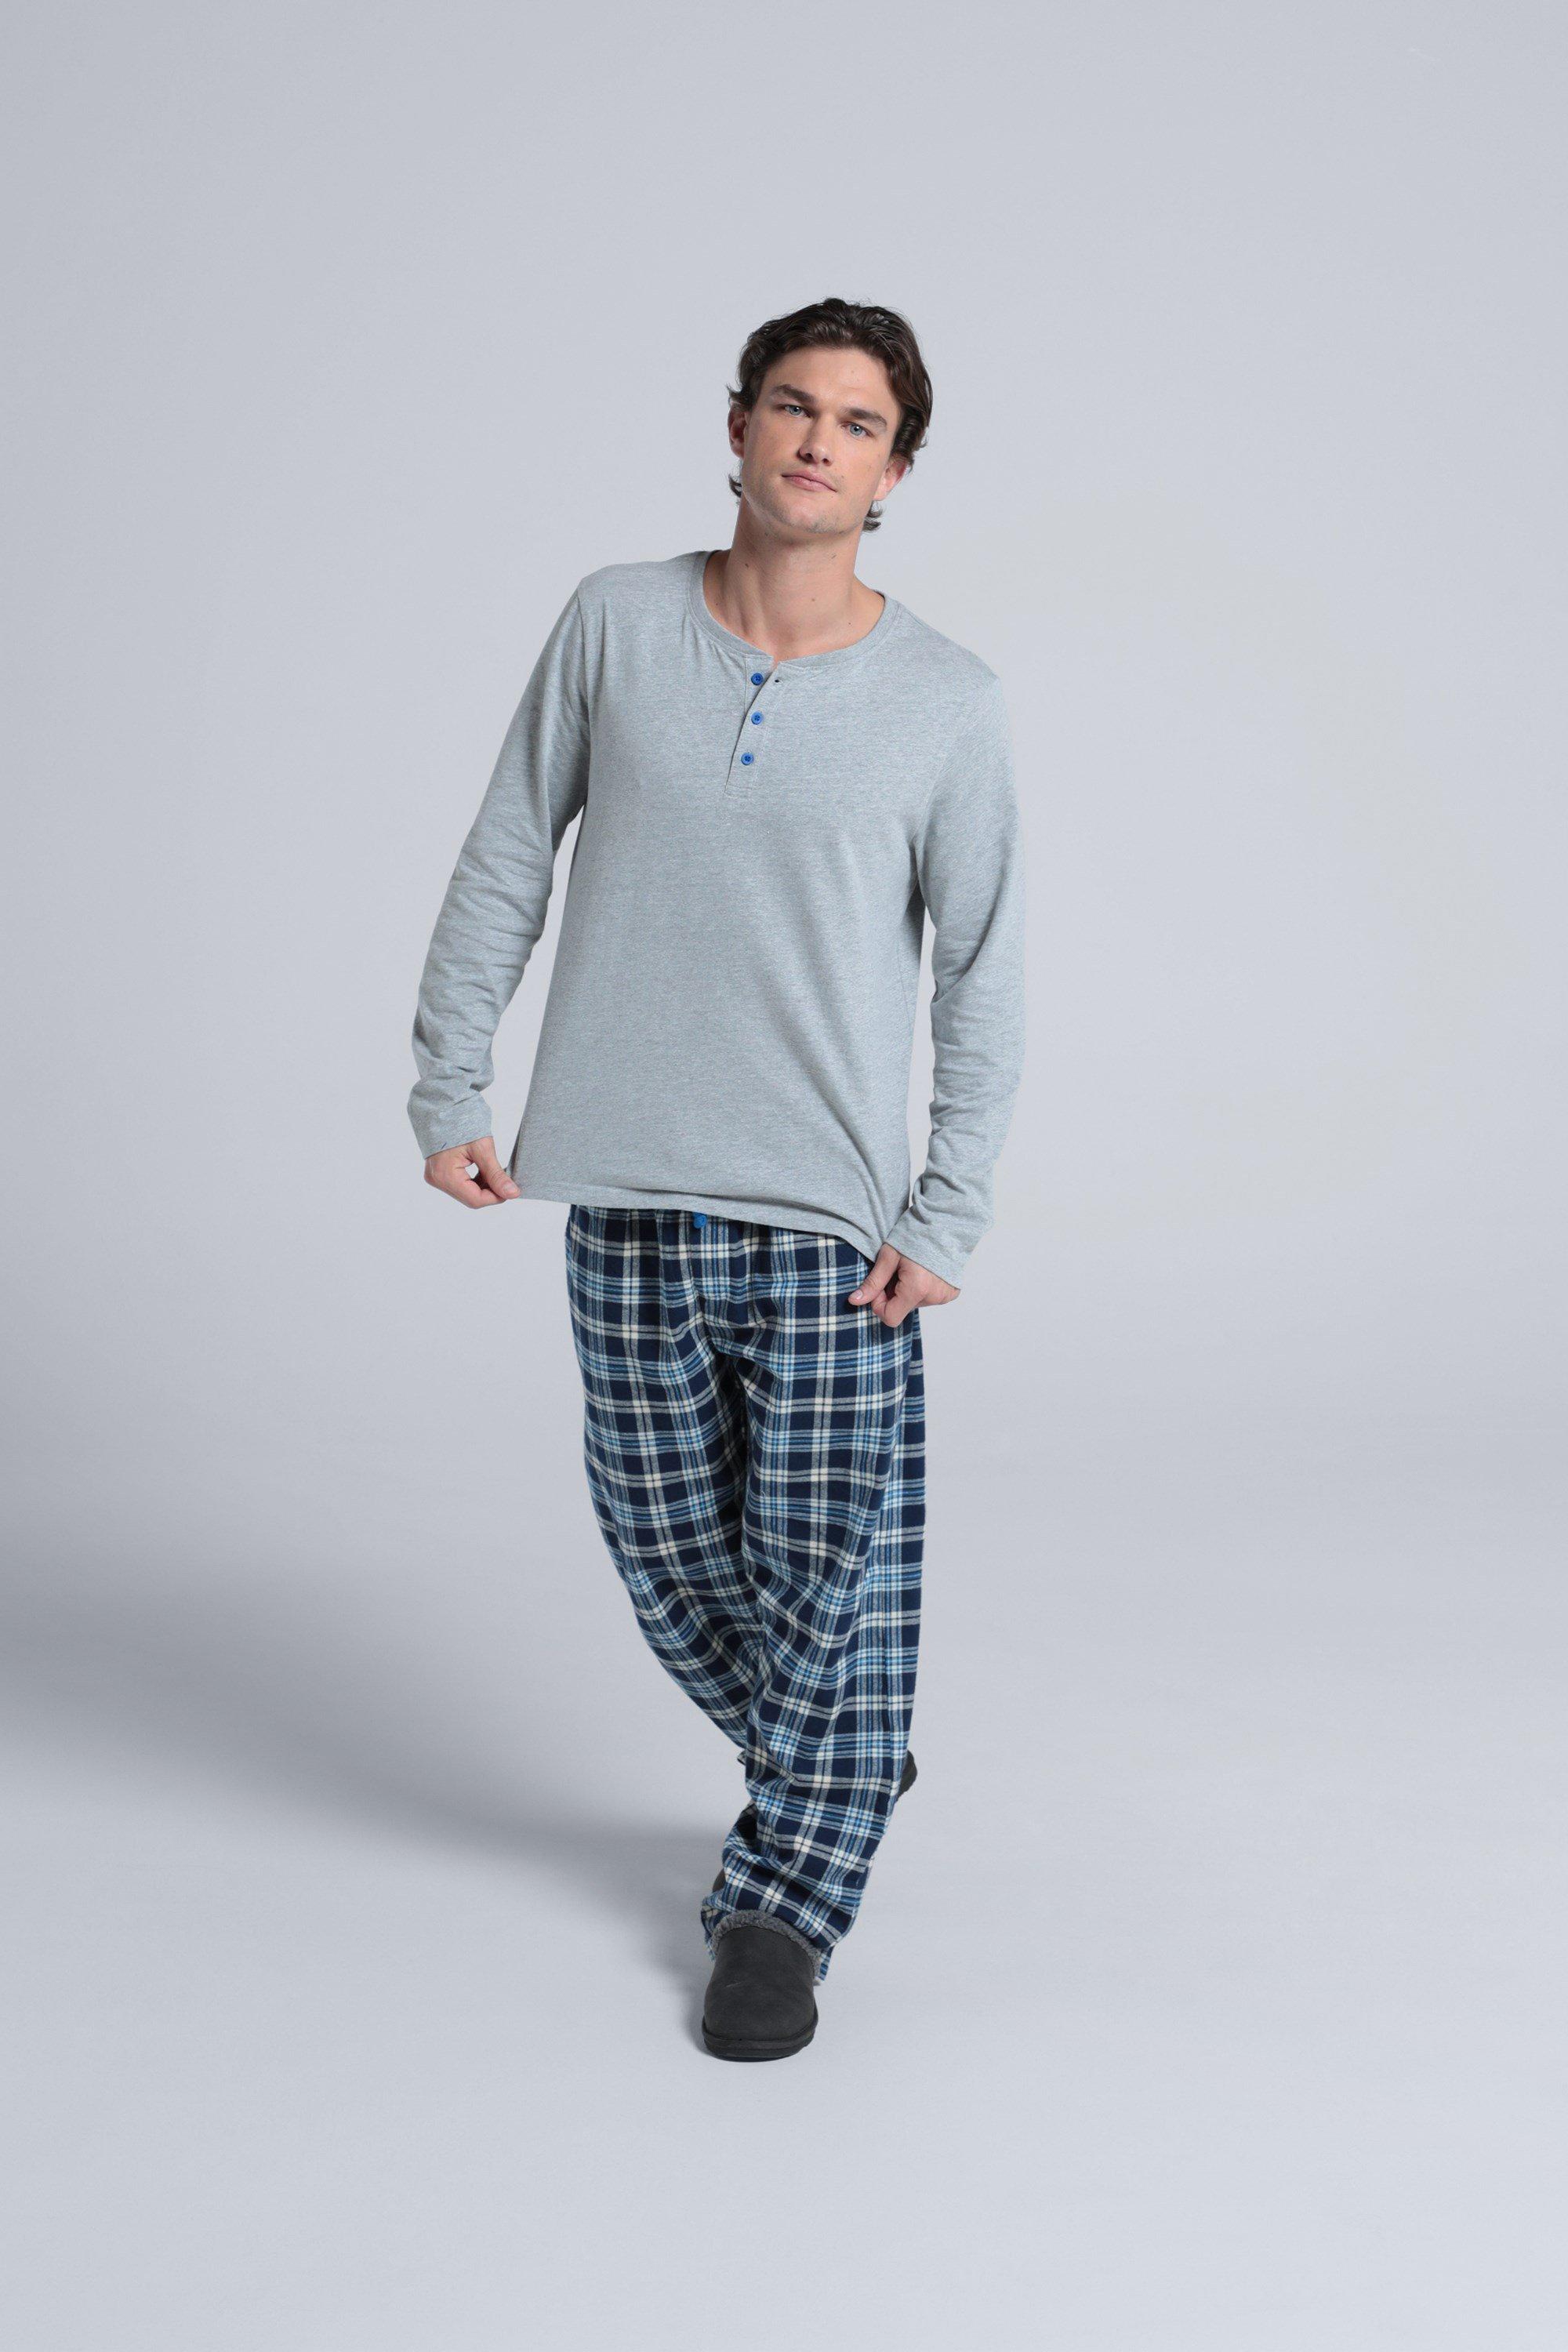 Snooze  Pyjama Set Relaxed Fit Cosy Organic Cotton Soft Loungewear